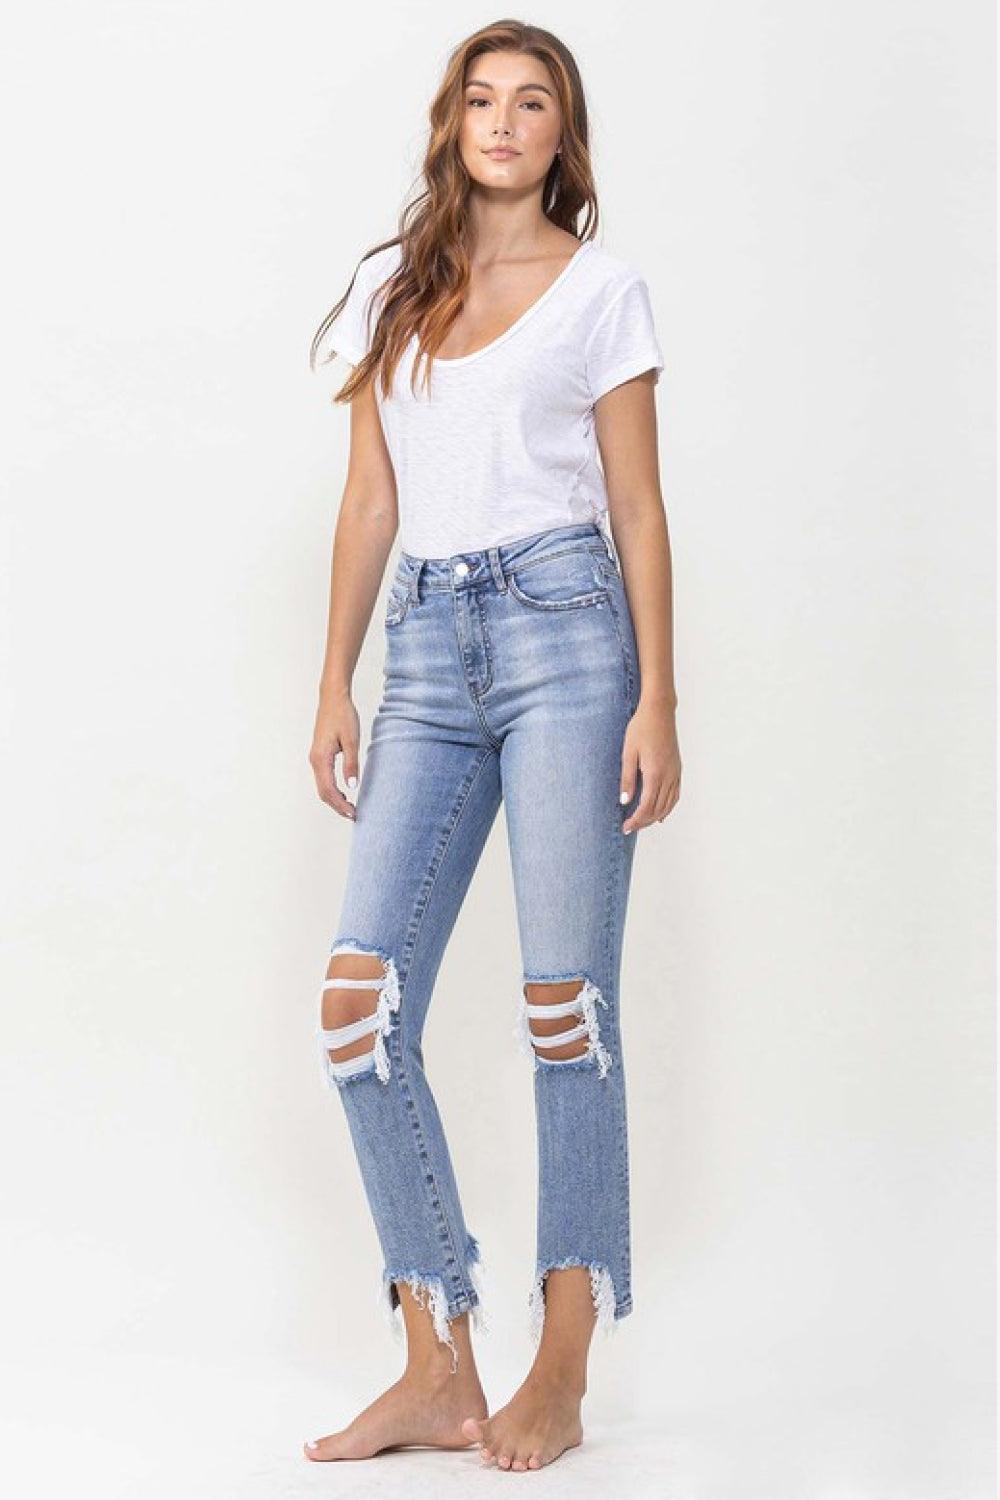 Bona Fide Fashion - Full Size Courtney Super High Rise Kick Flare Jeans - Women Fashion - Bona Fide Fashion